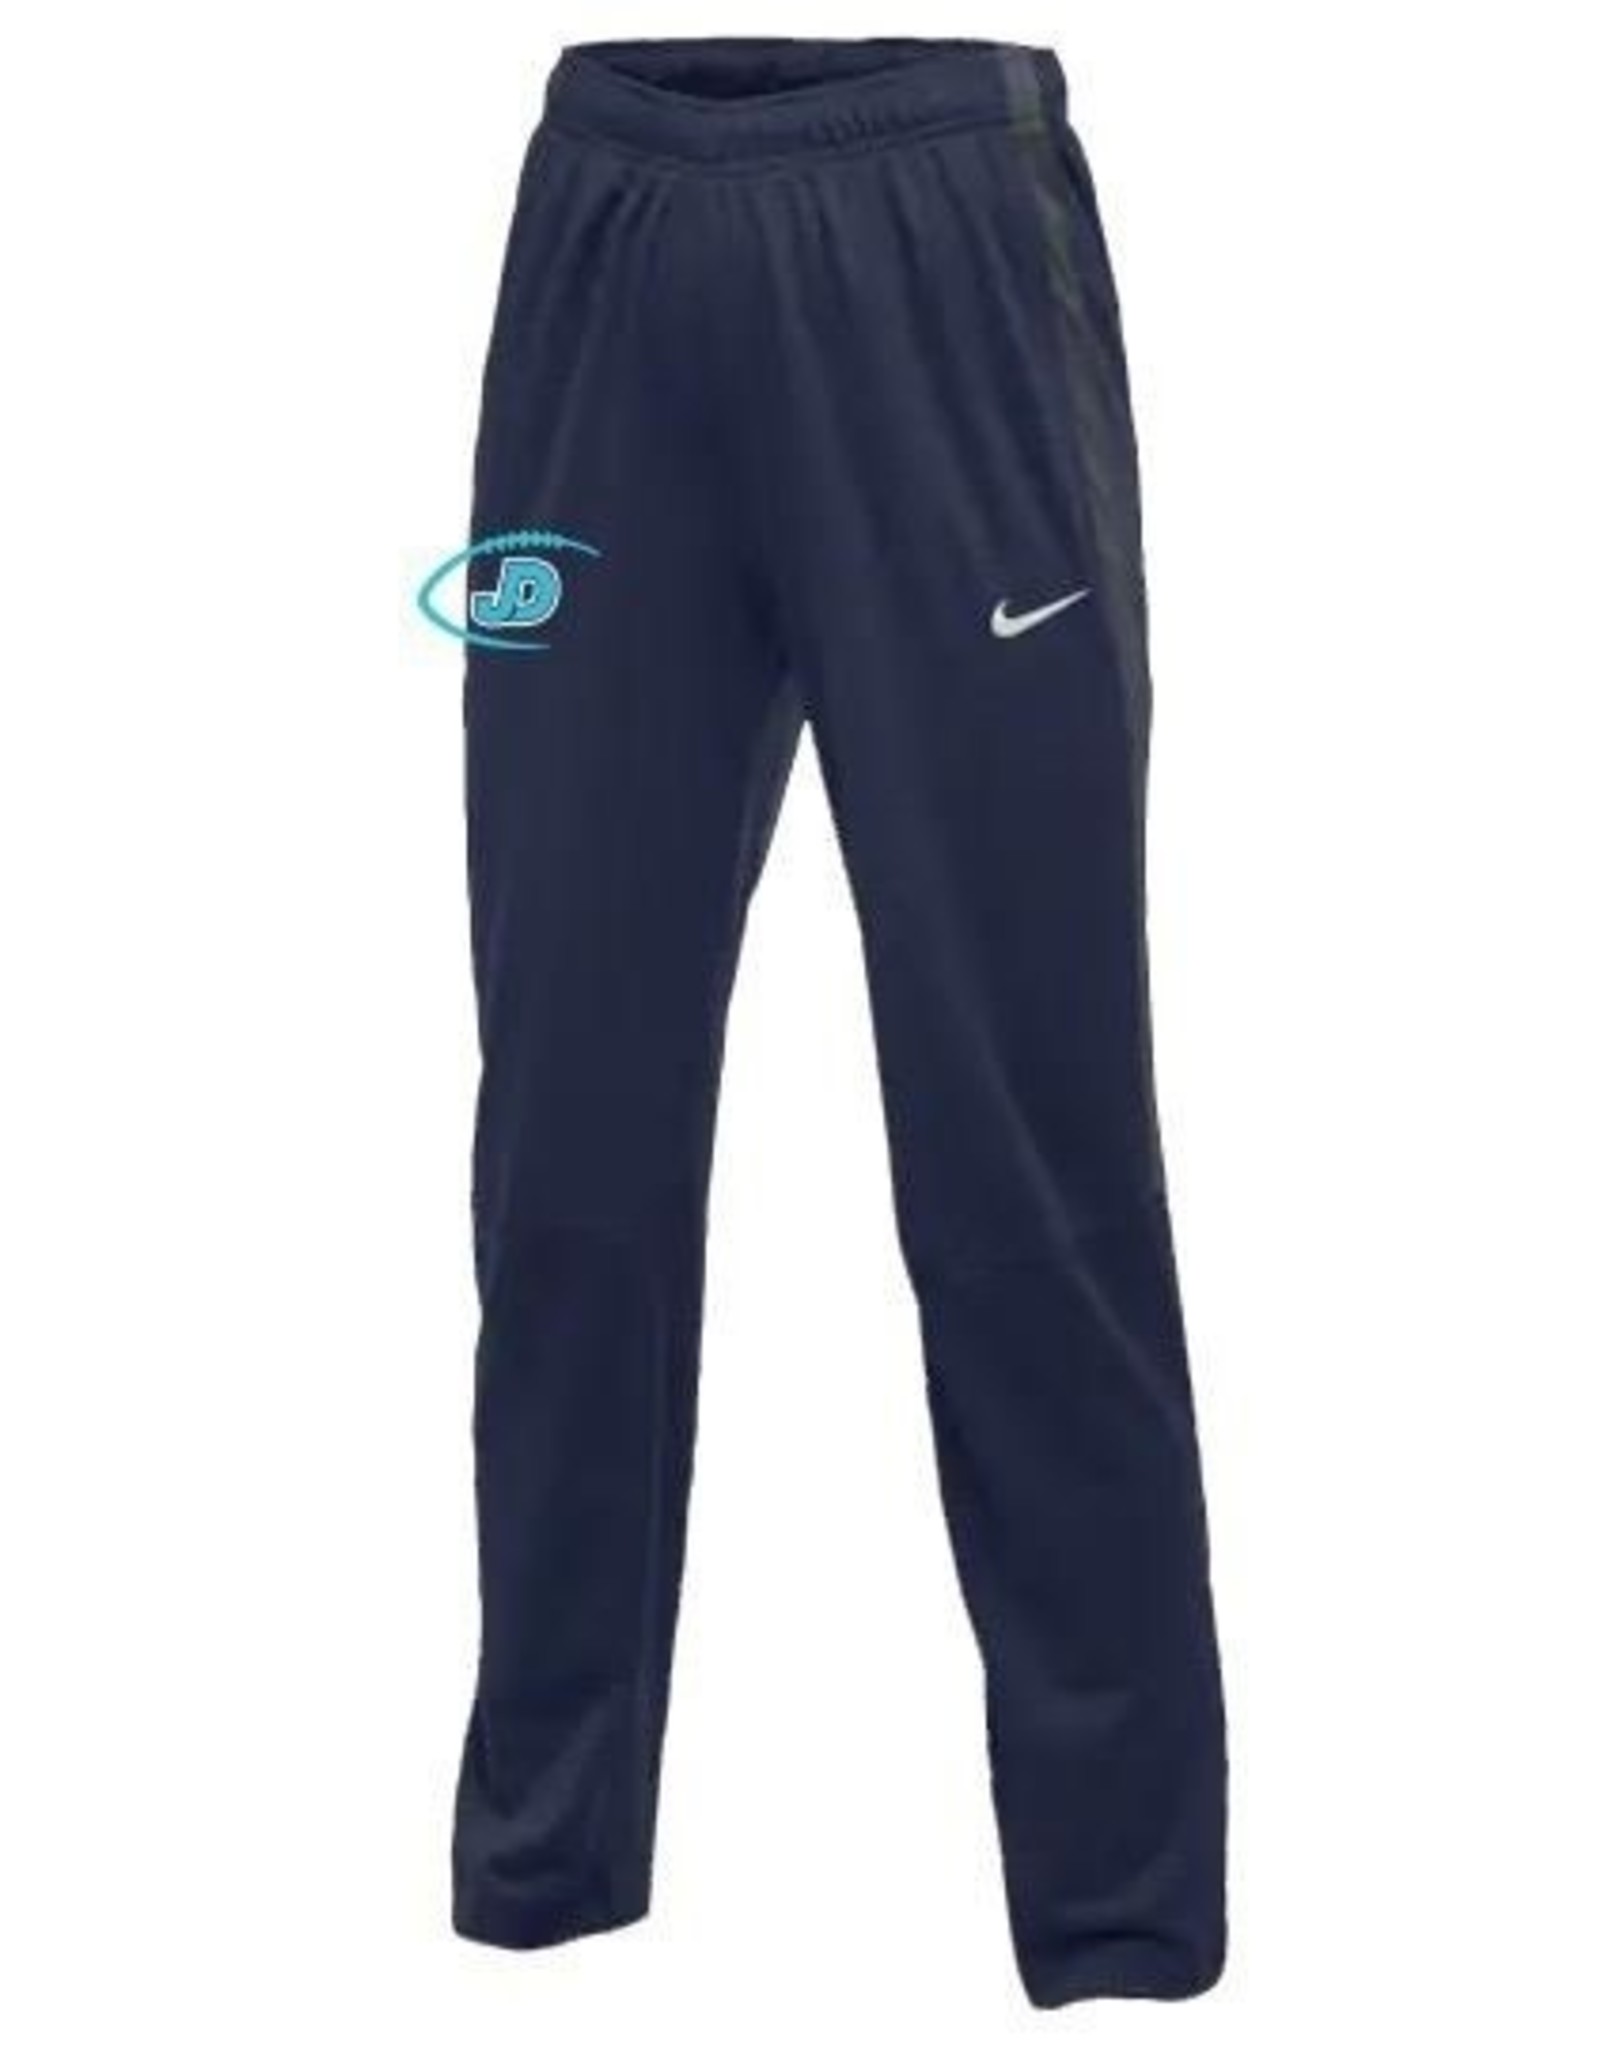 NON-UNIFORM JD Nike Team Epic Pants, Football